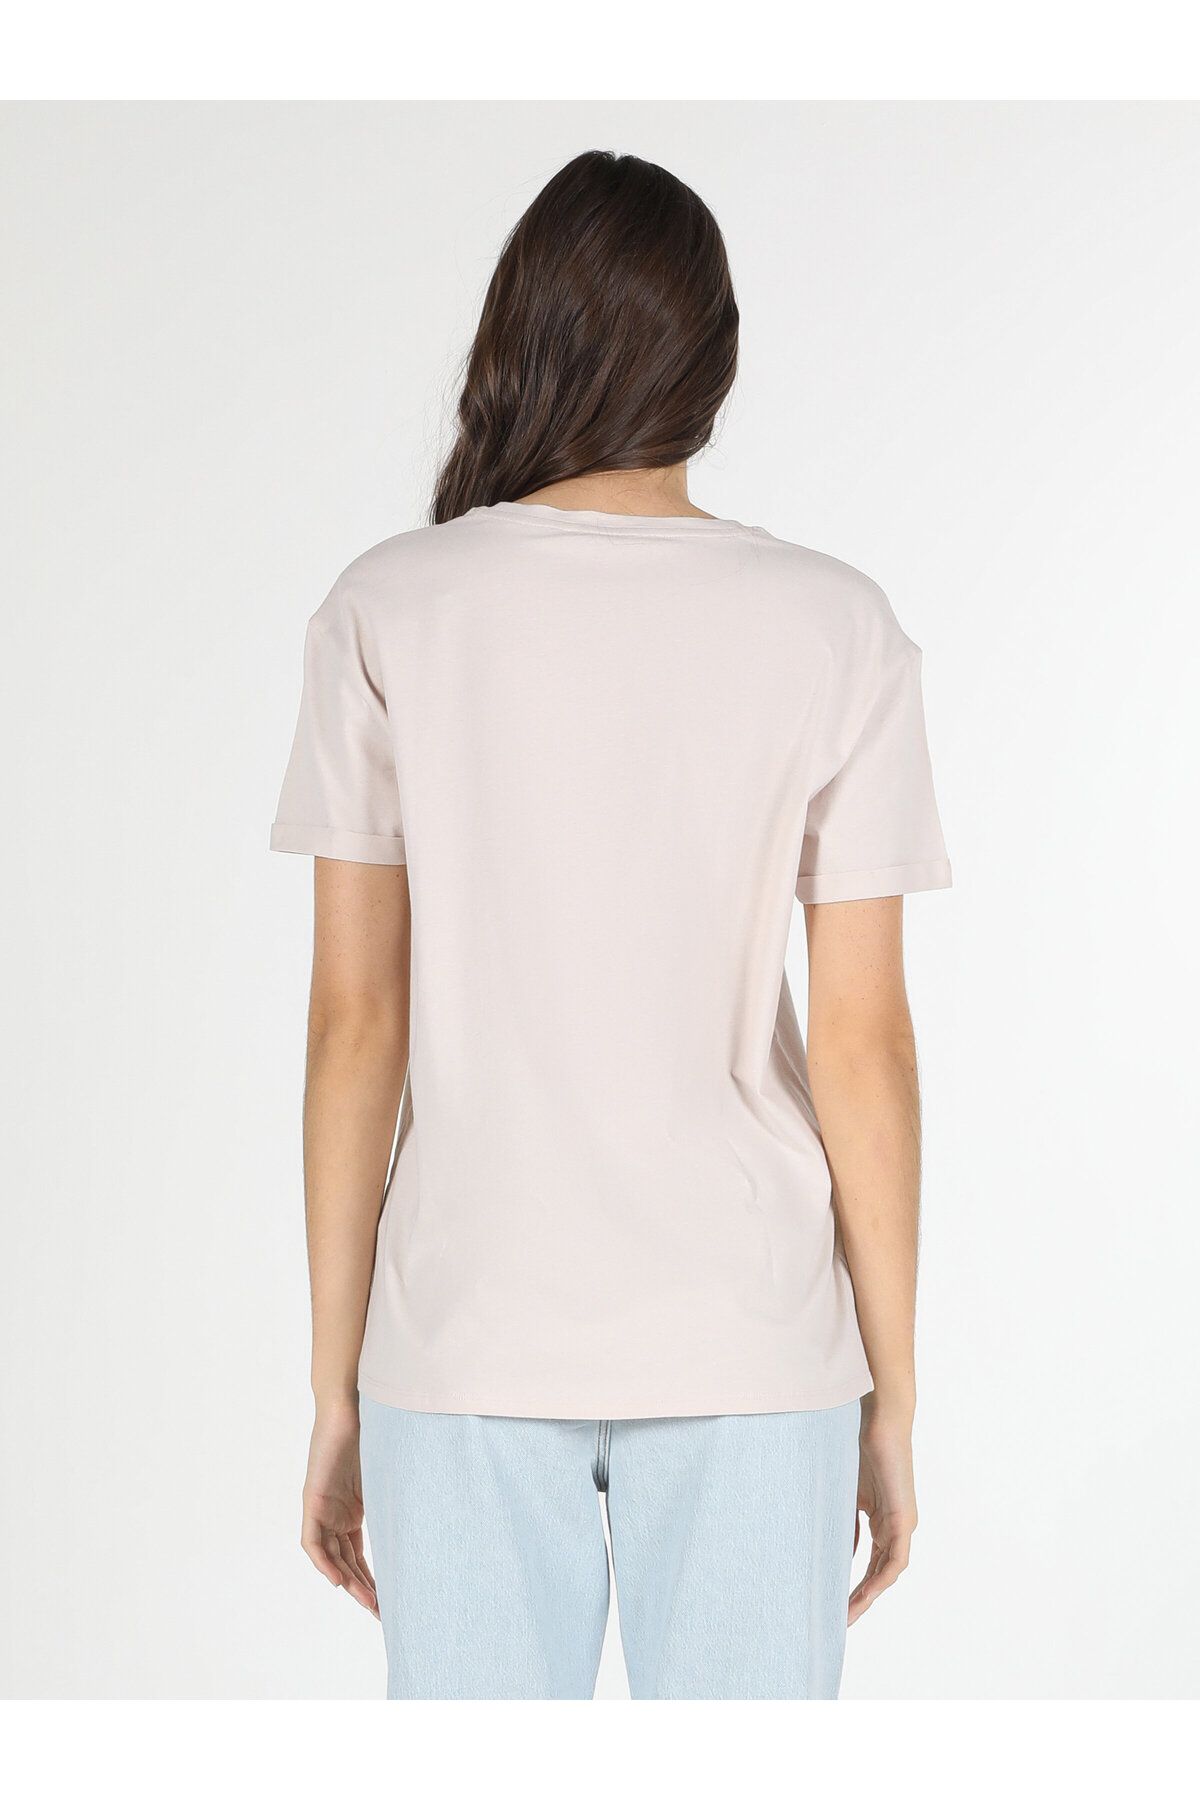 Colin’s تی شرت آستین کوتاه زنانه به رنگ بژ با چاپ یقه Comfort Fit